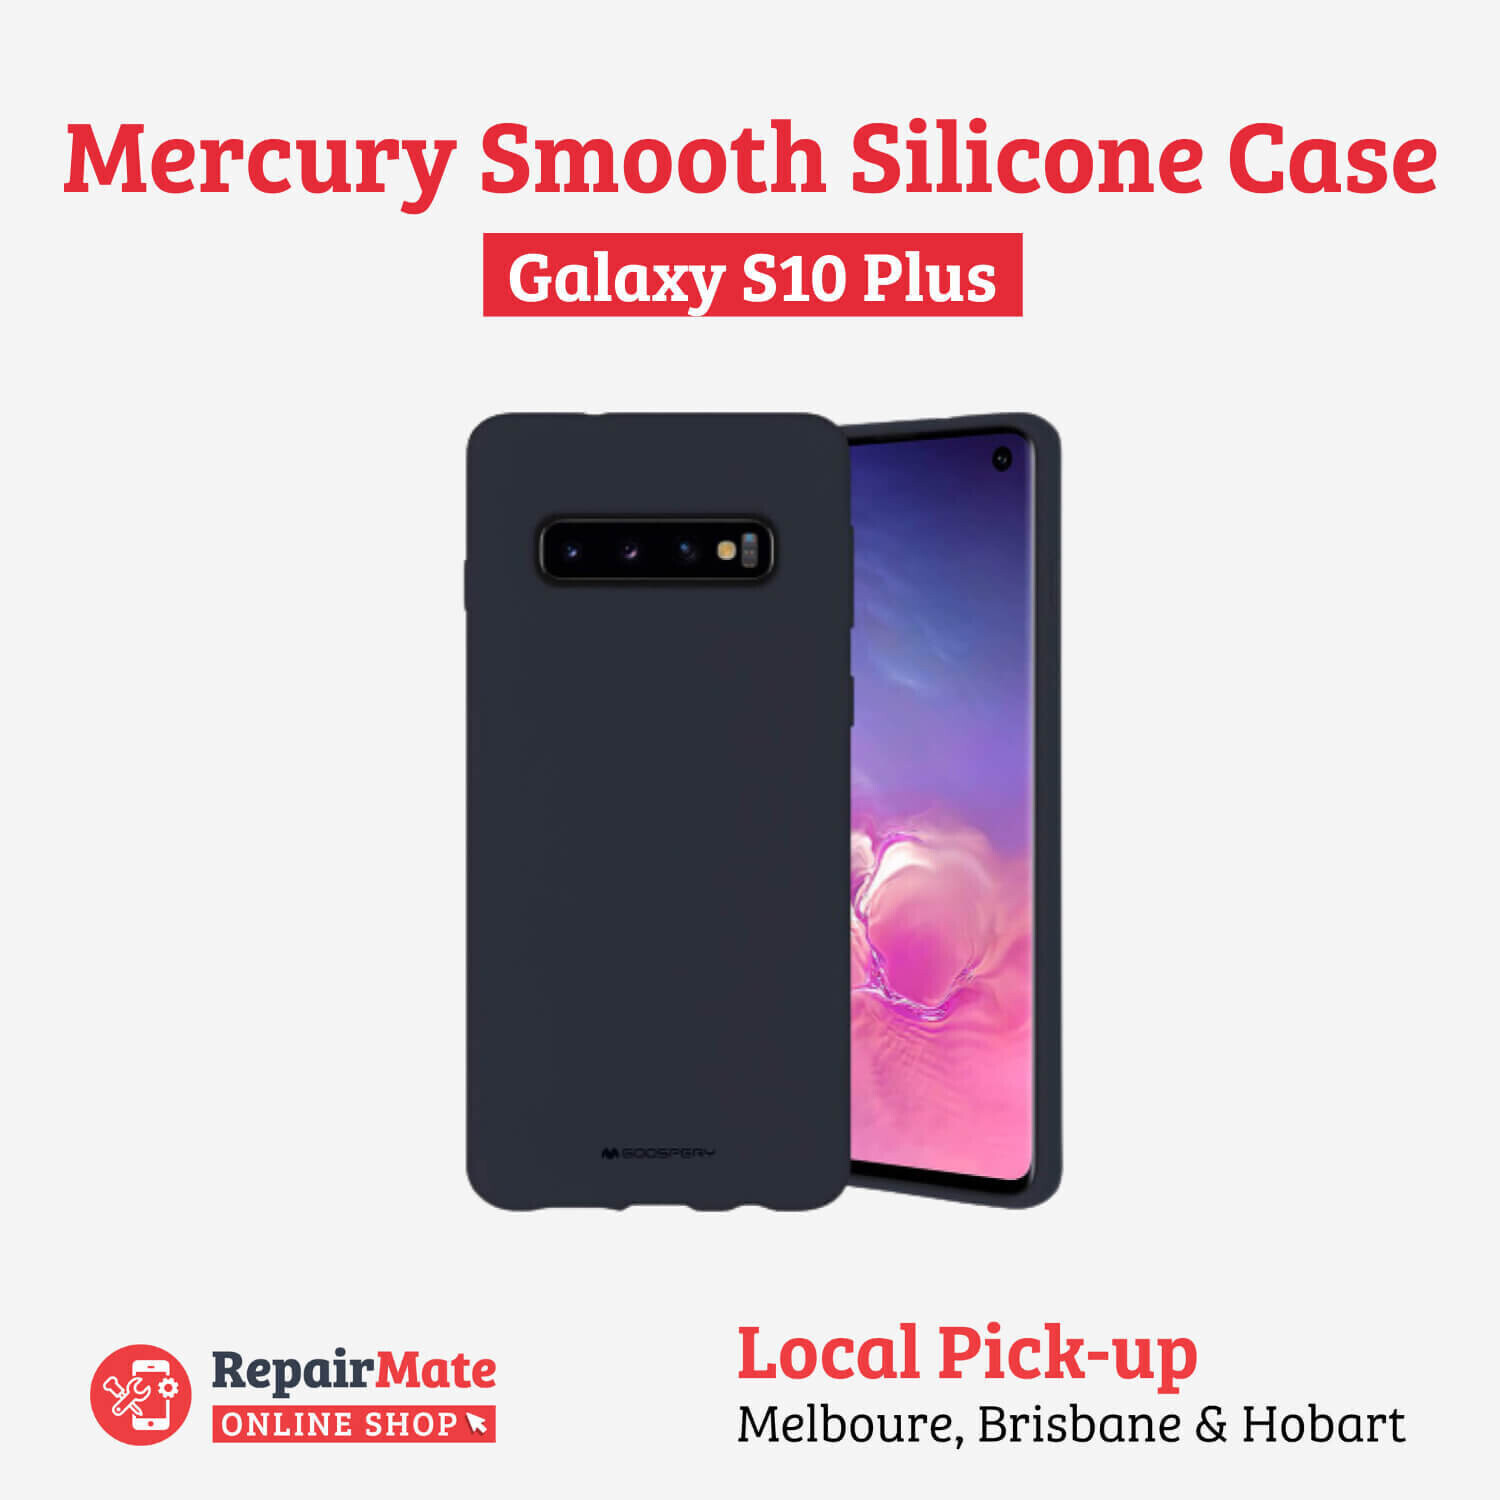 Samsung Galaxy S10 Plus Mercury Smooth Silicone Case